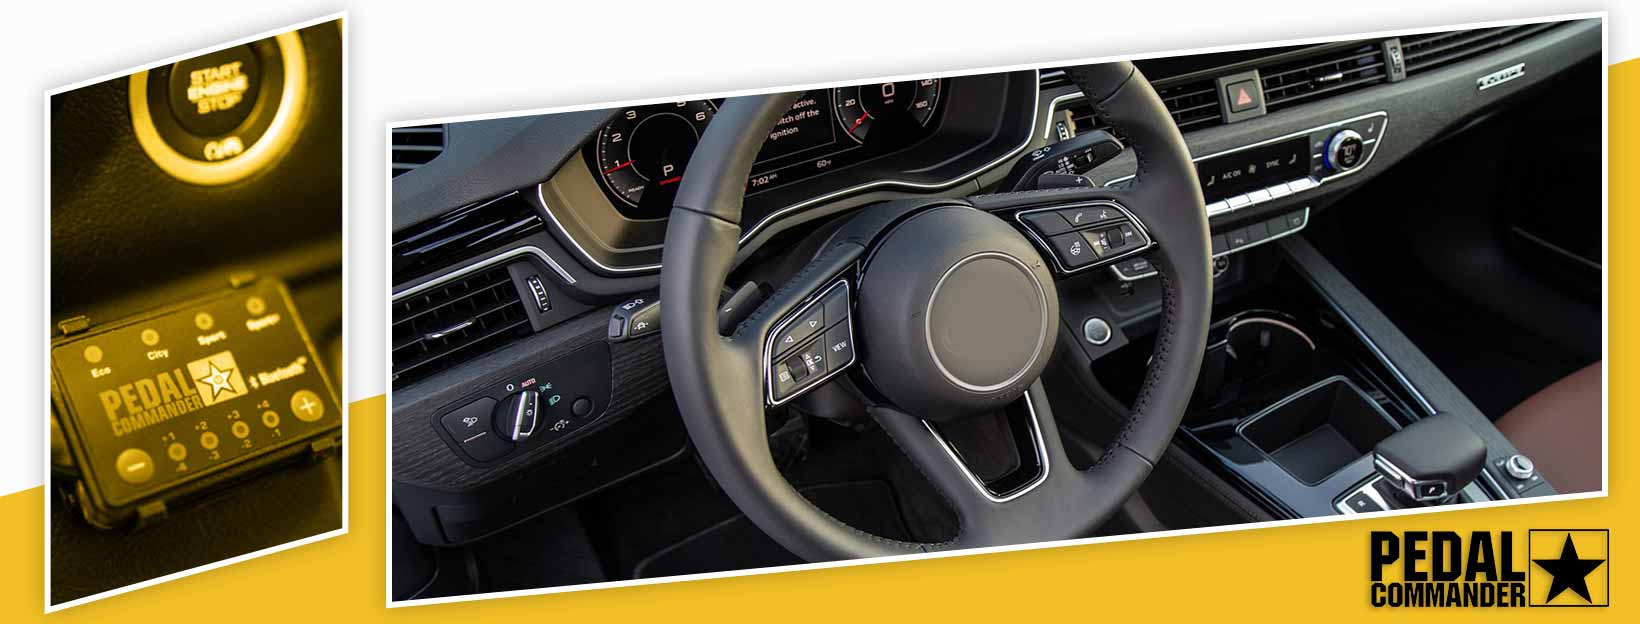 Pedal Commander for Audi A4 - interior